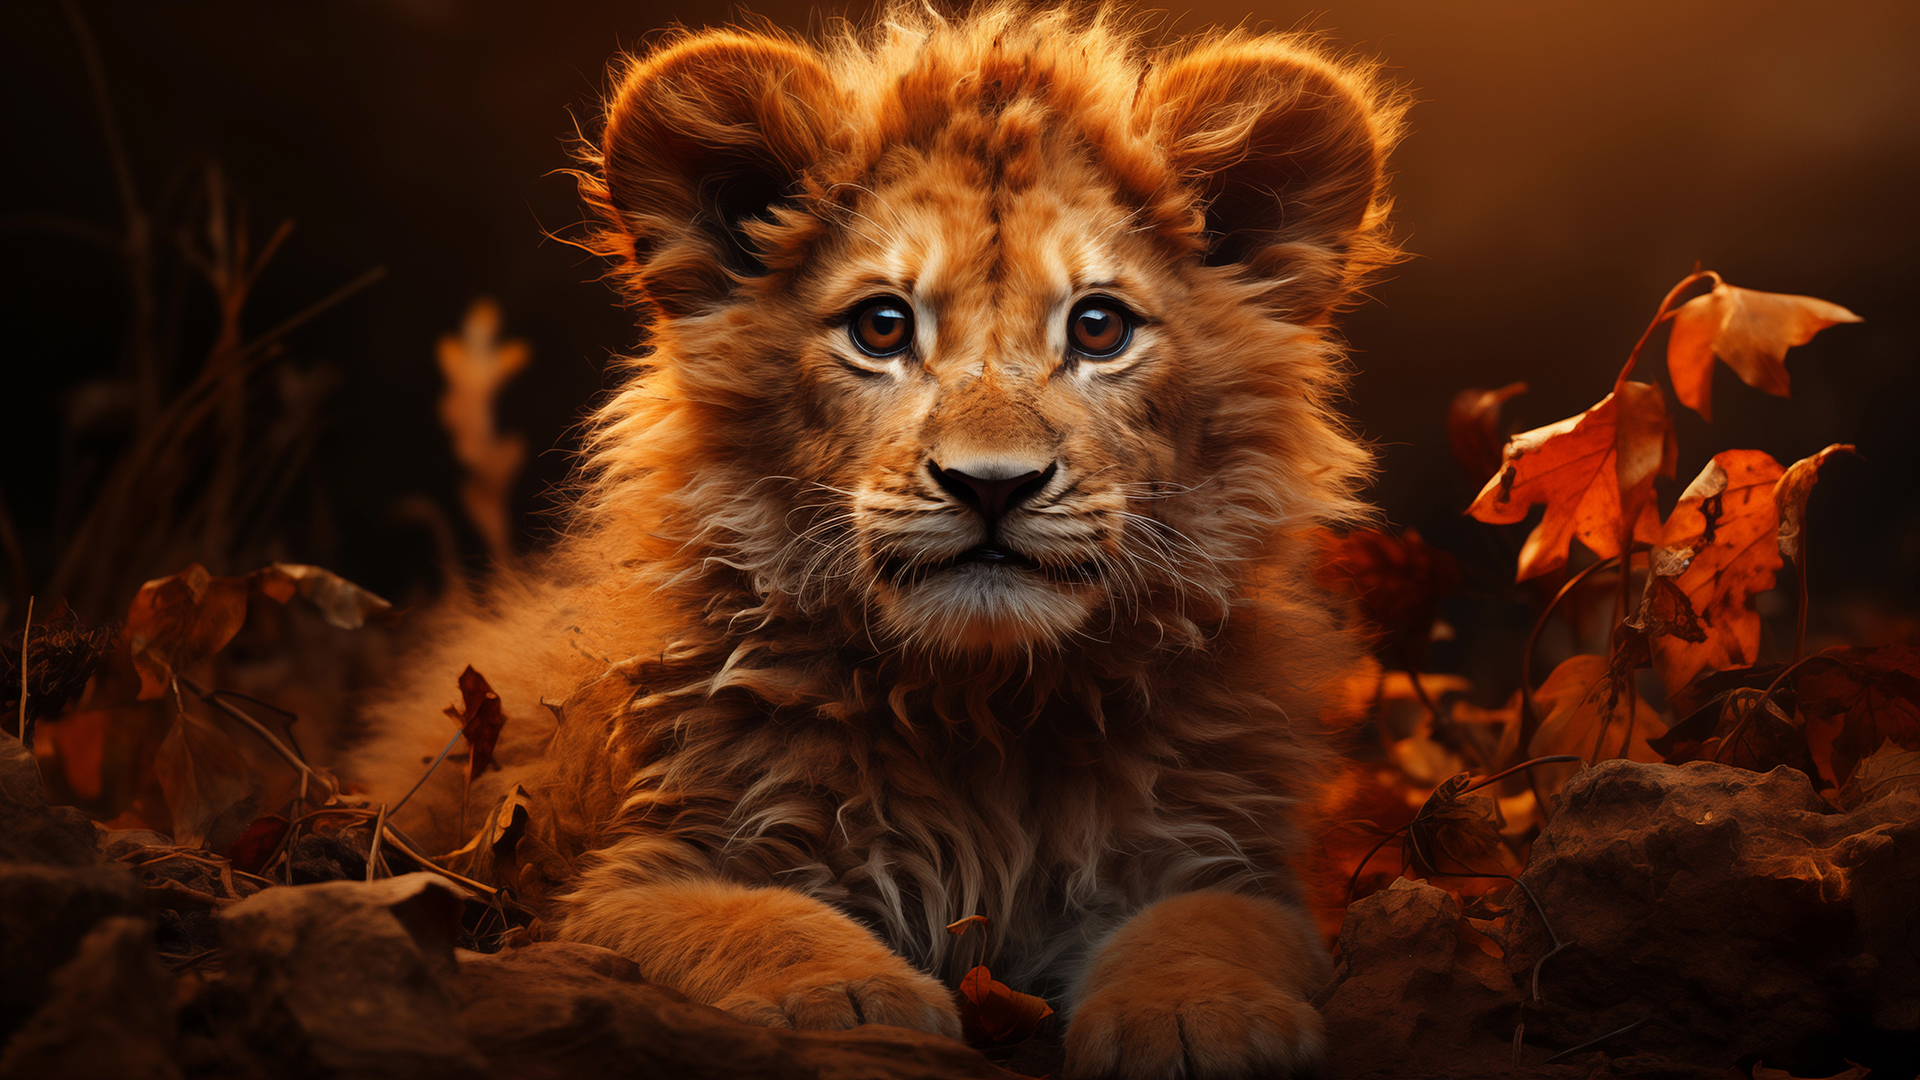 Baby lion cub HD wallpaper 4K free download for Desktop laptop and Phones